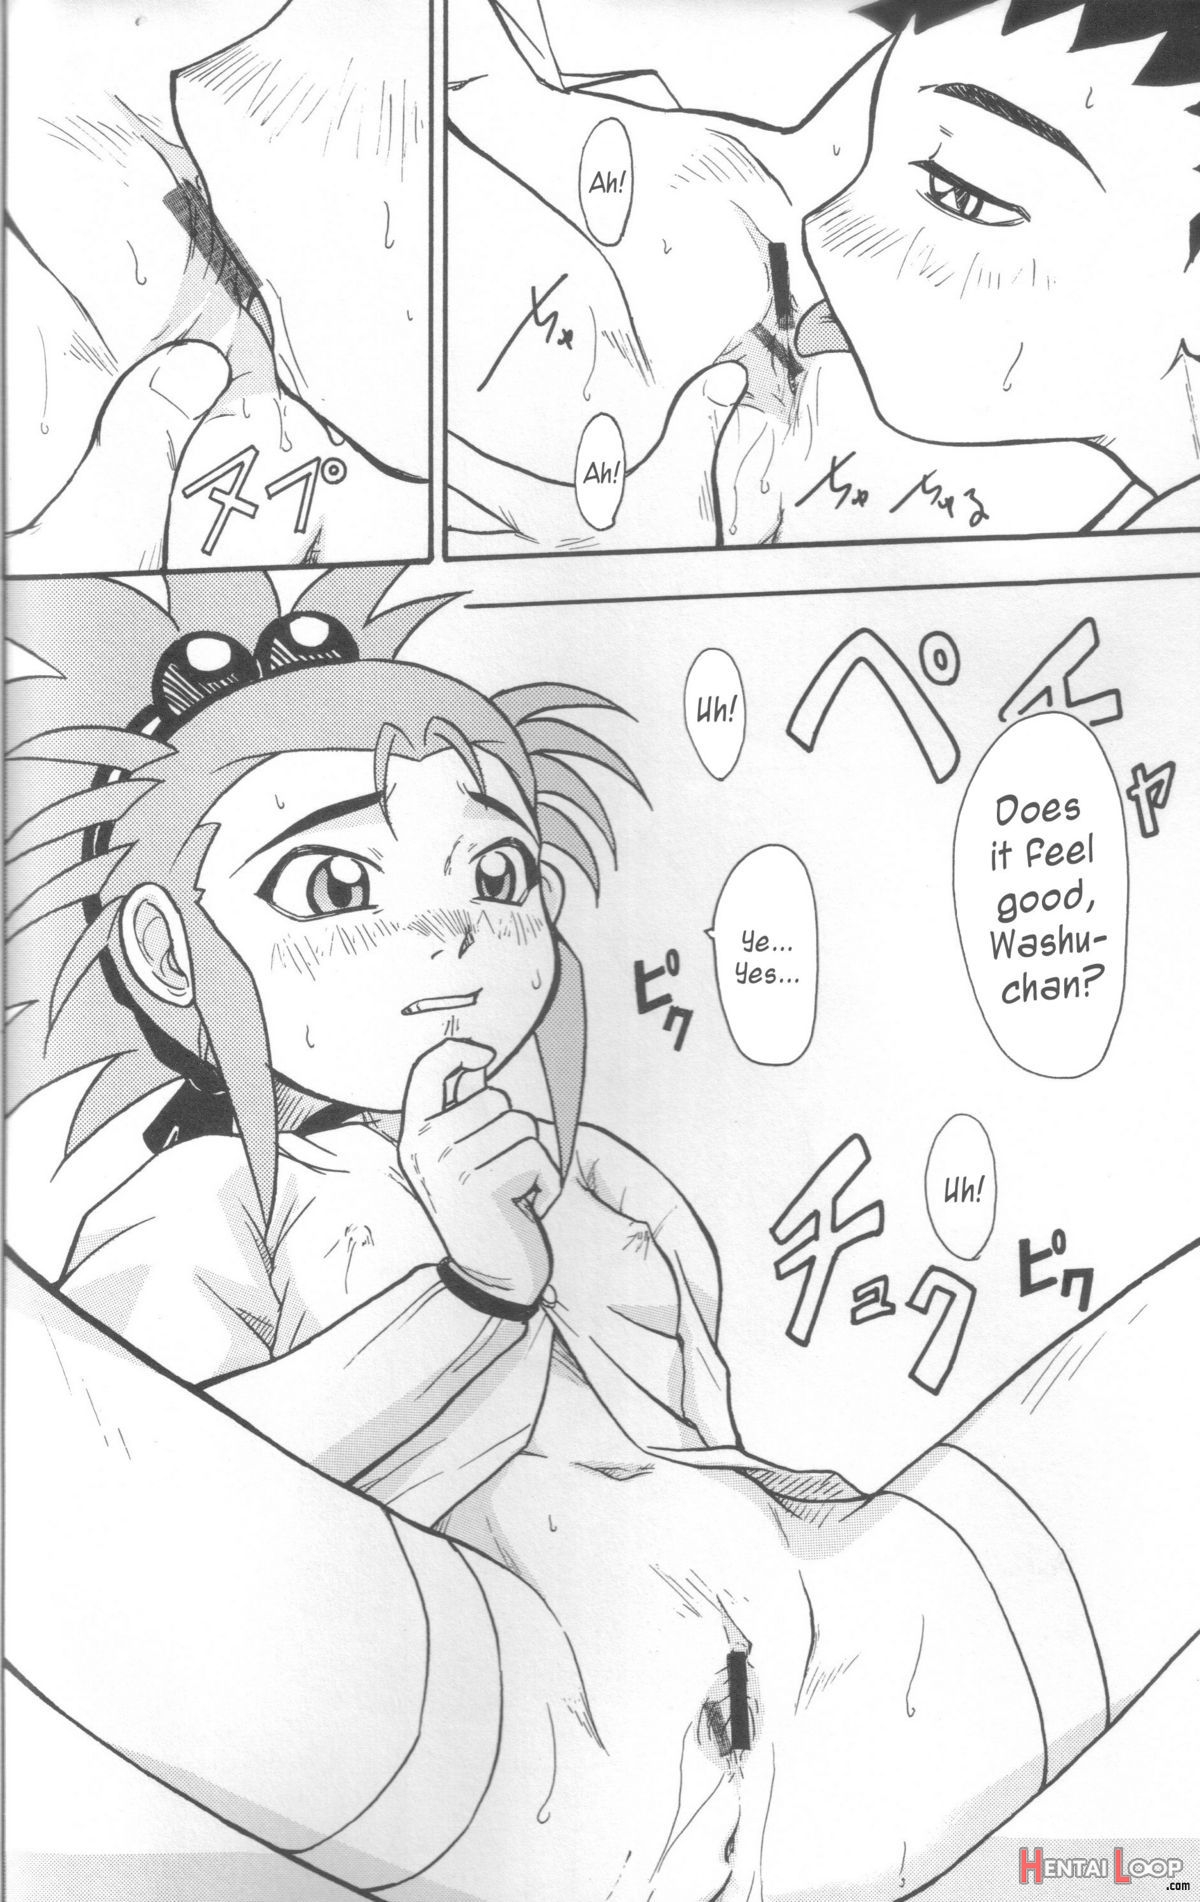 Kani-san 2 page 13